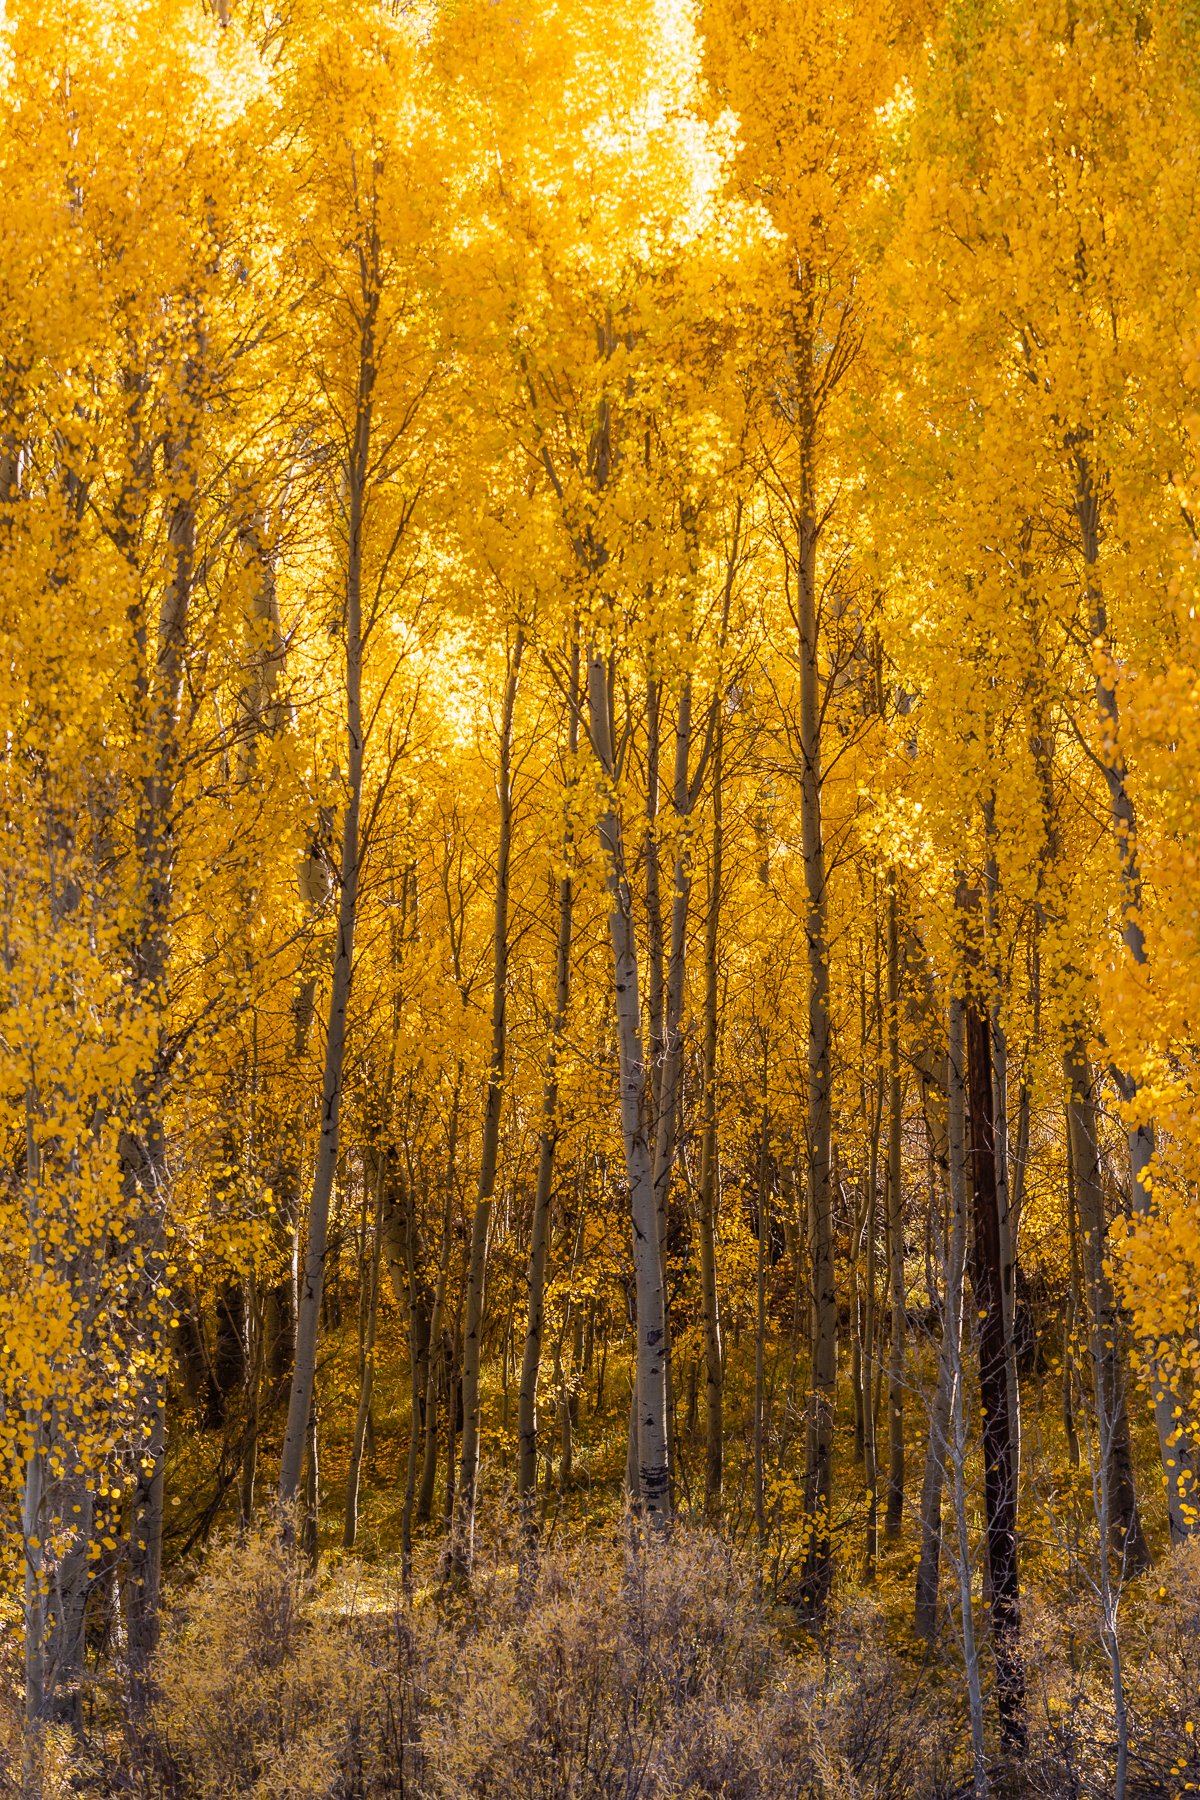 aspen-trees-autumn-leaf-print-canvas-yellow-orange-golden-gold-fall-peeping-foliage-yosemite-october.jpg